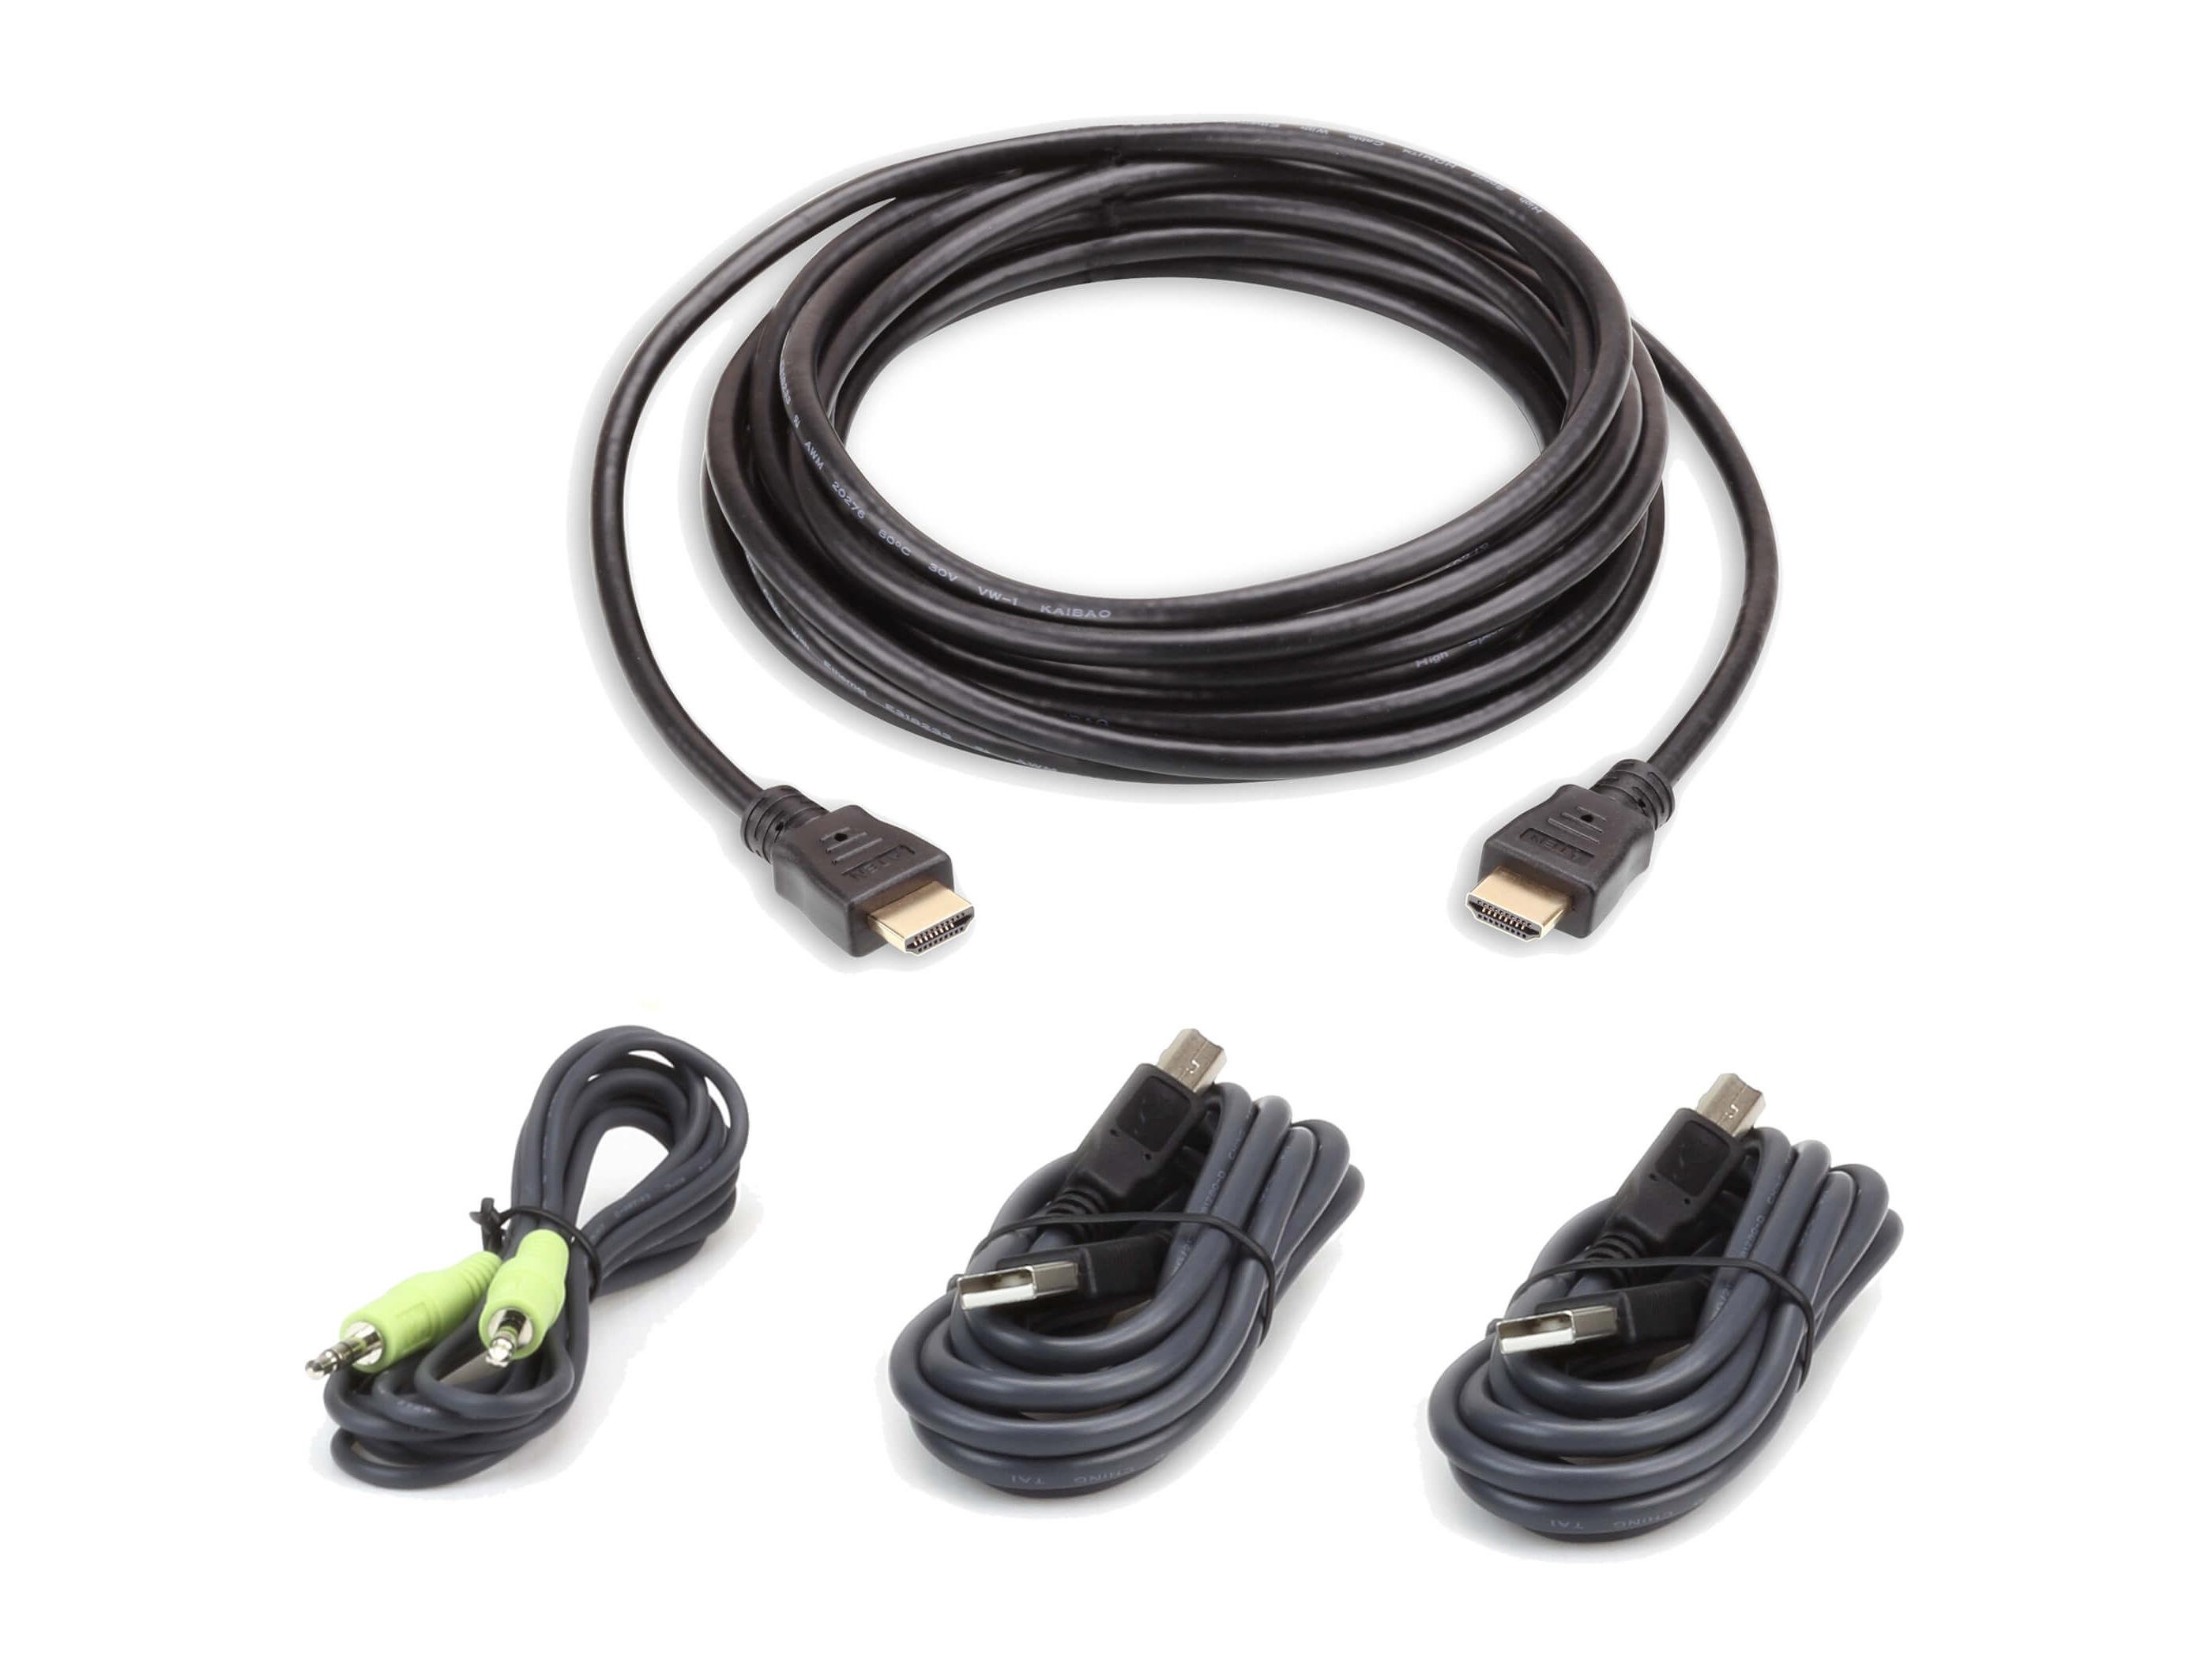 2L7D03UHX4 10ft Single Display HDMI Secure KVM Cable Kit by Aten